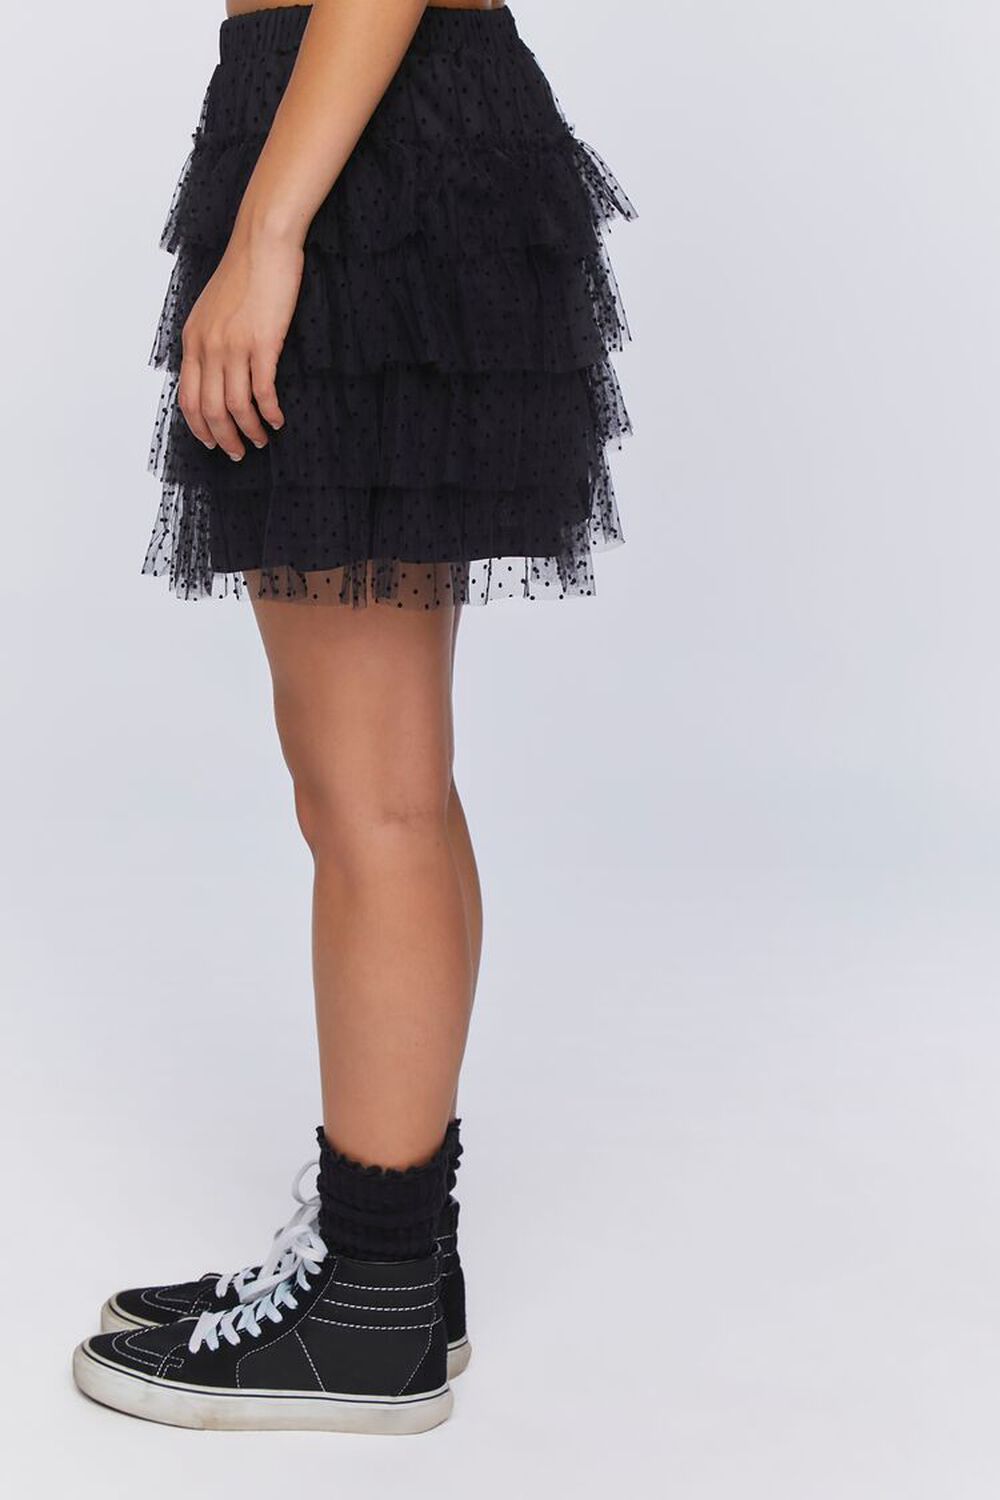 BLACK Clip Dot Tiered Mini Skirt, image 3